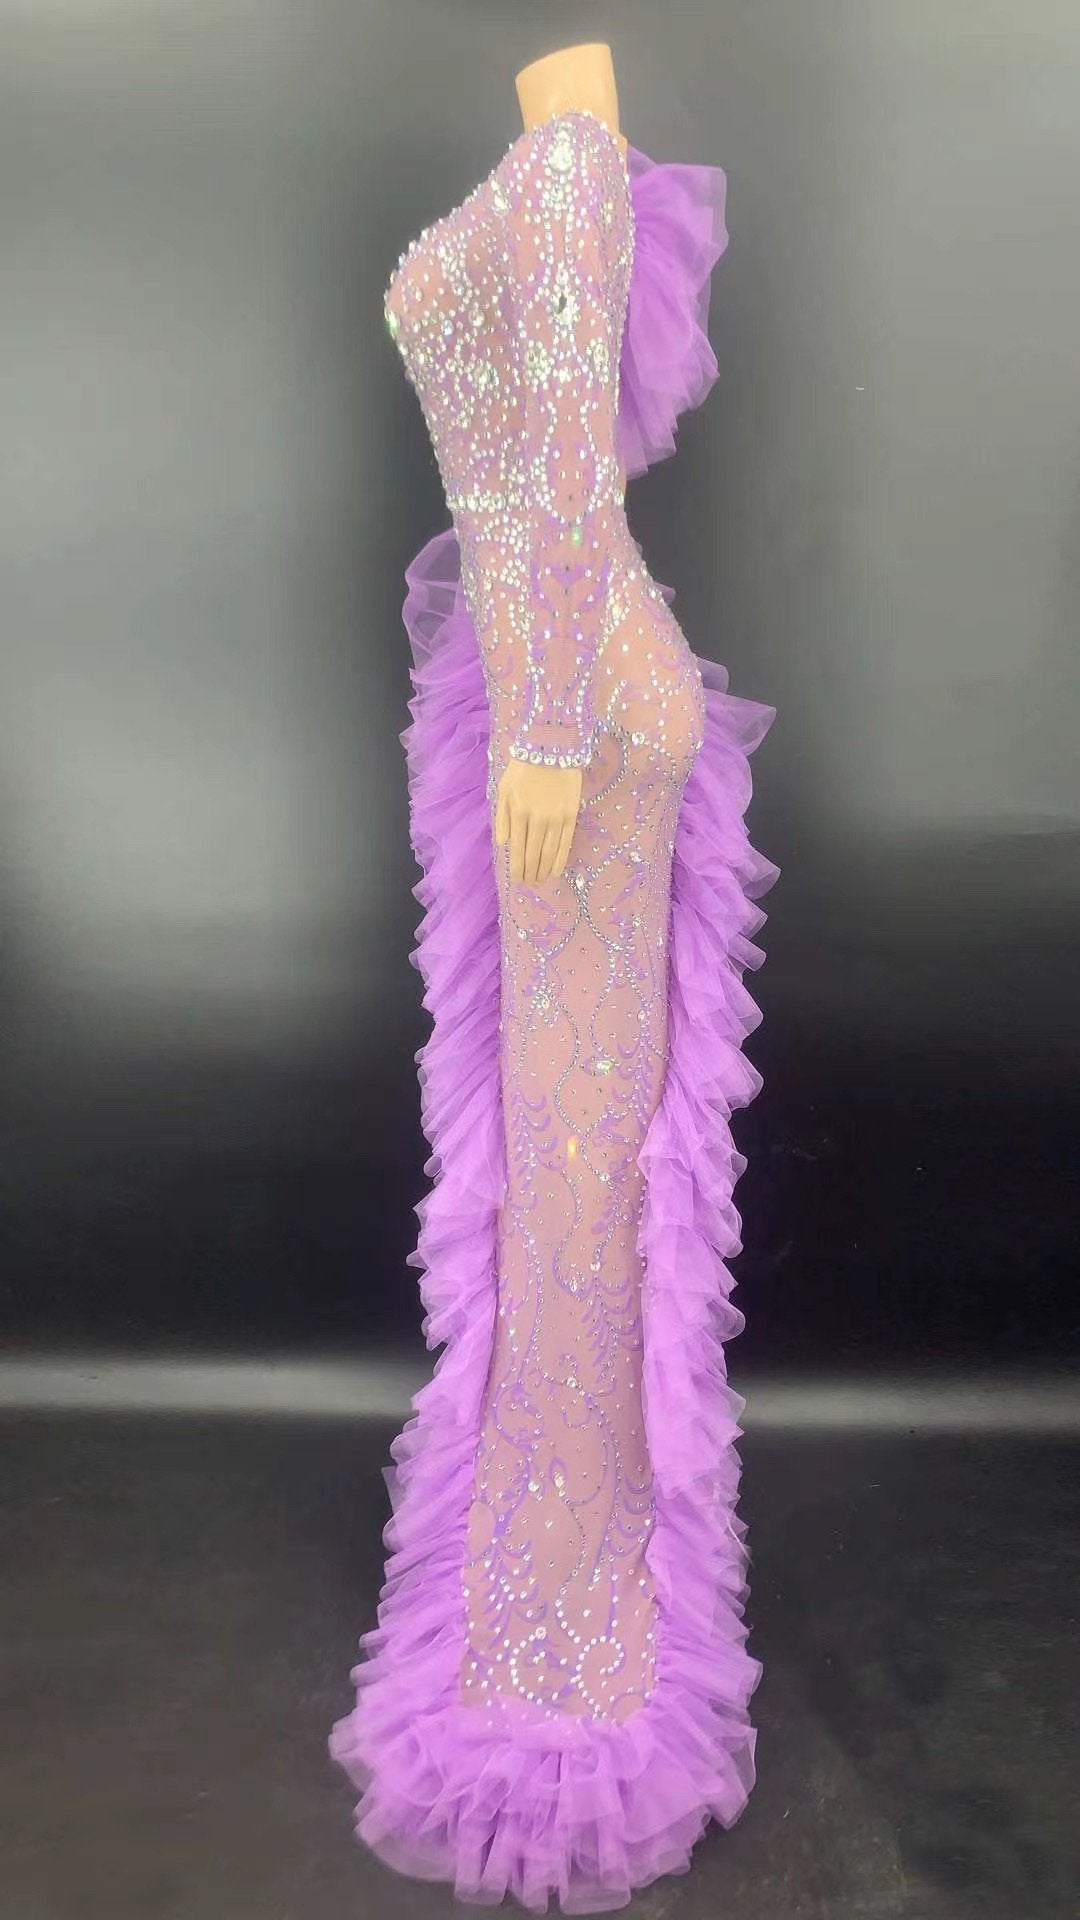 Purple Kendall dress